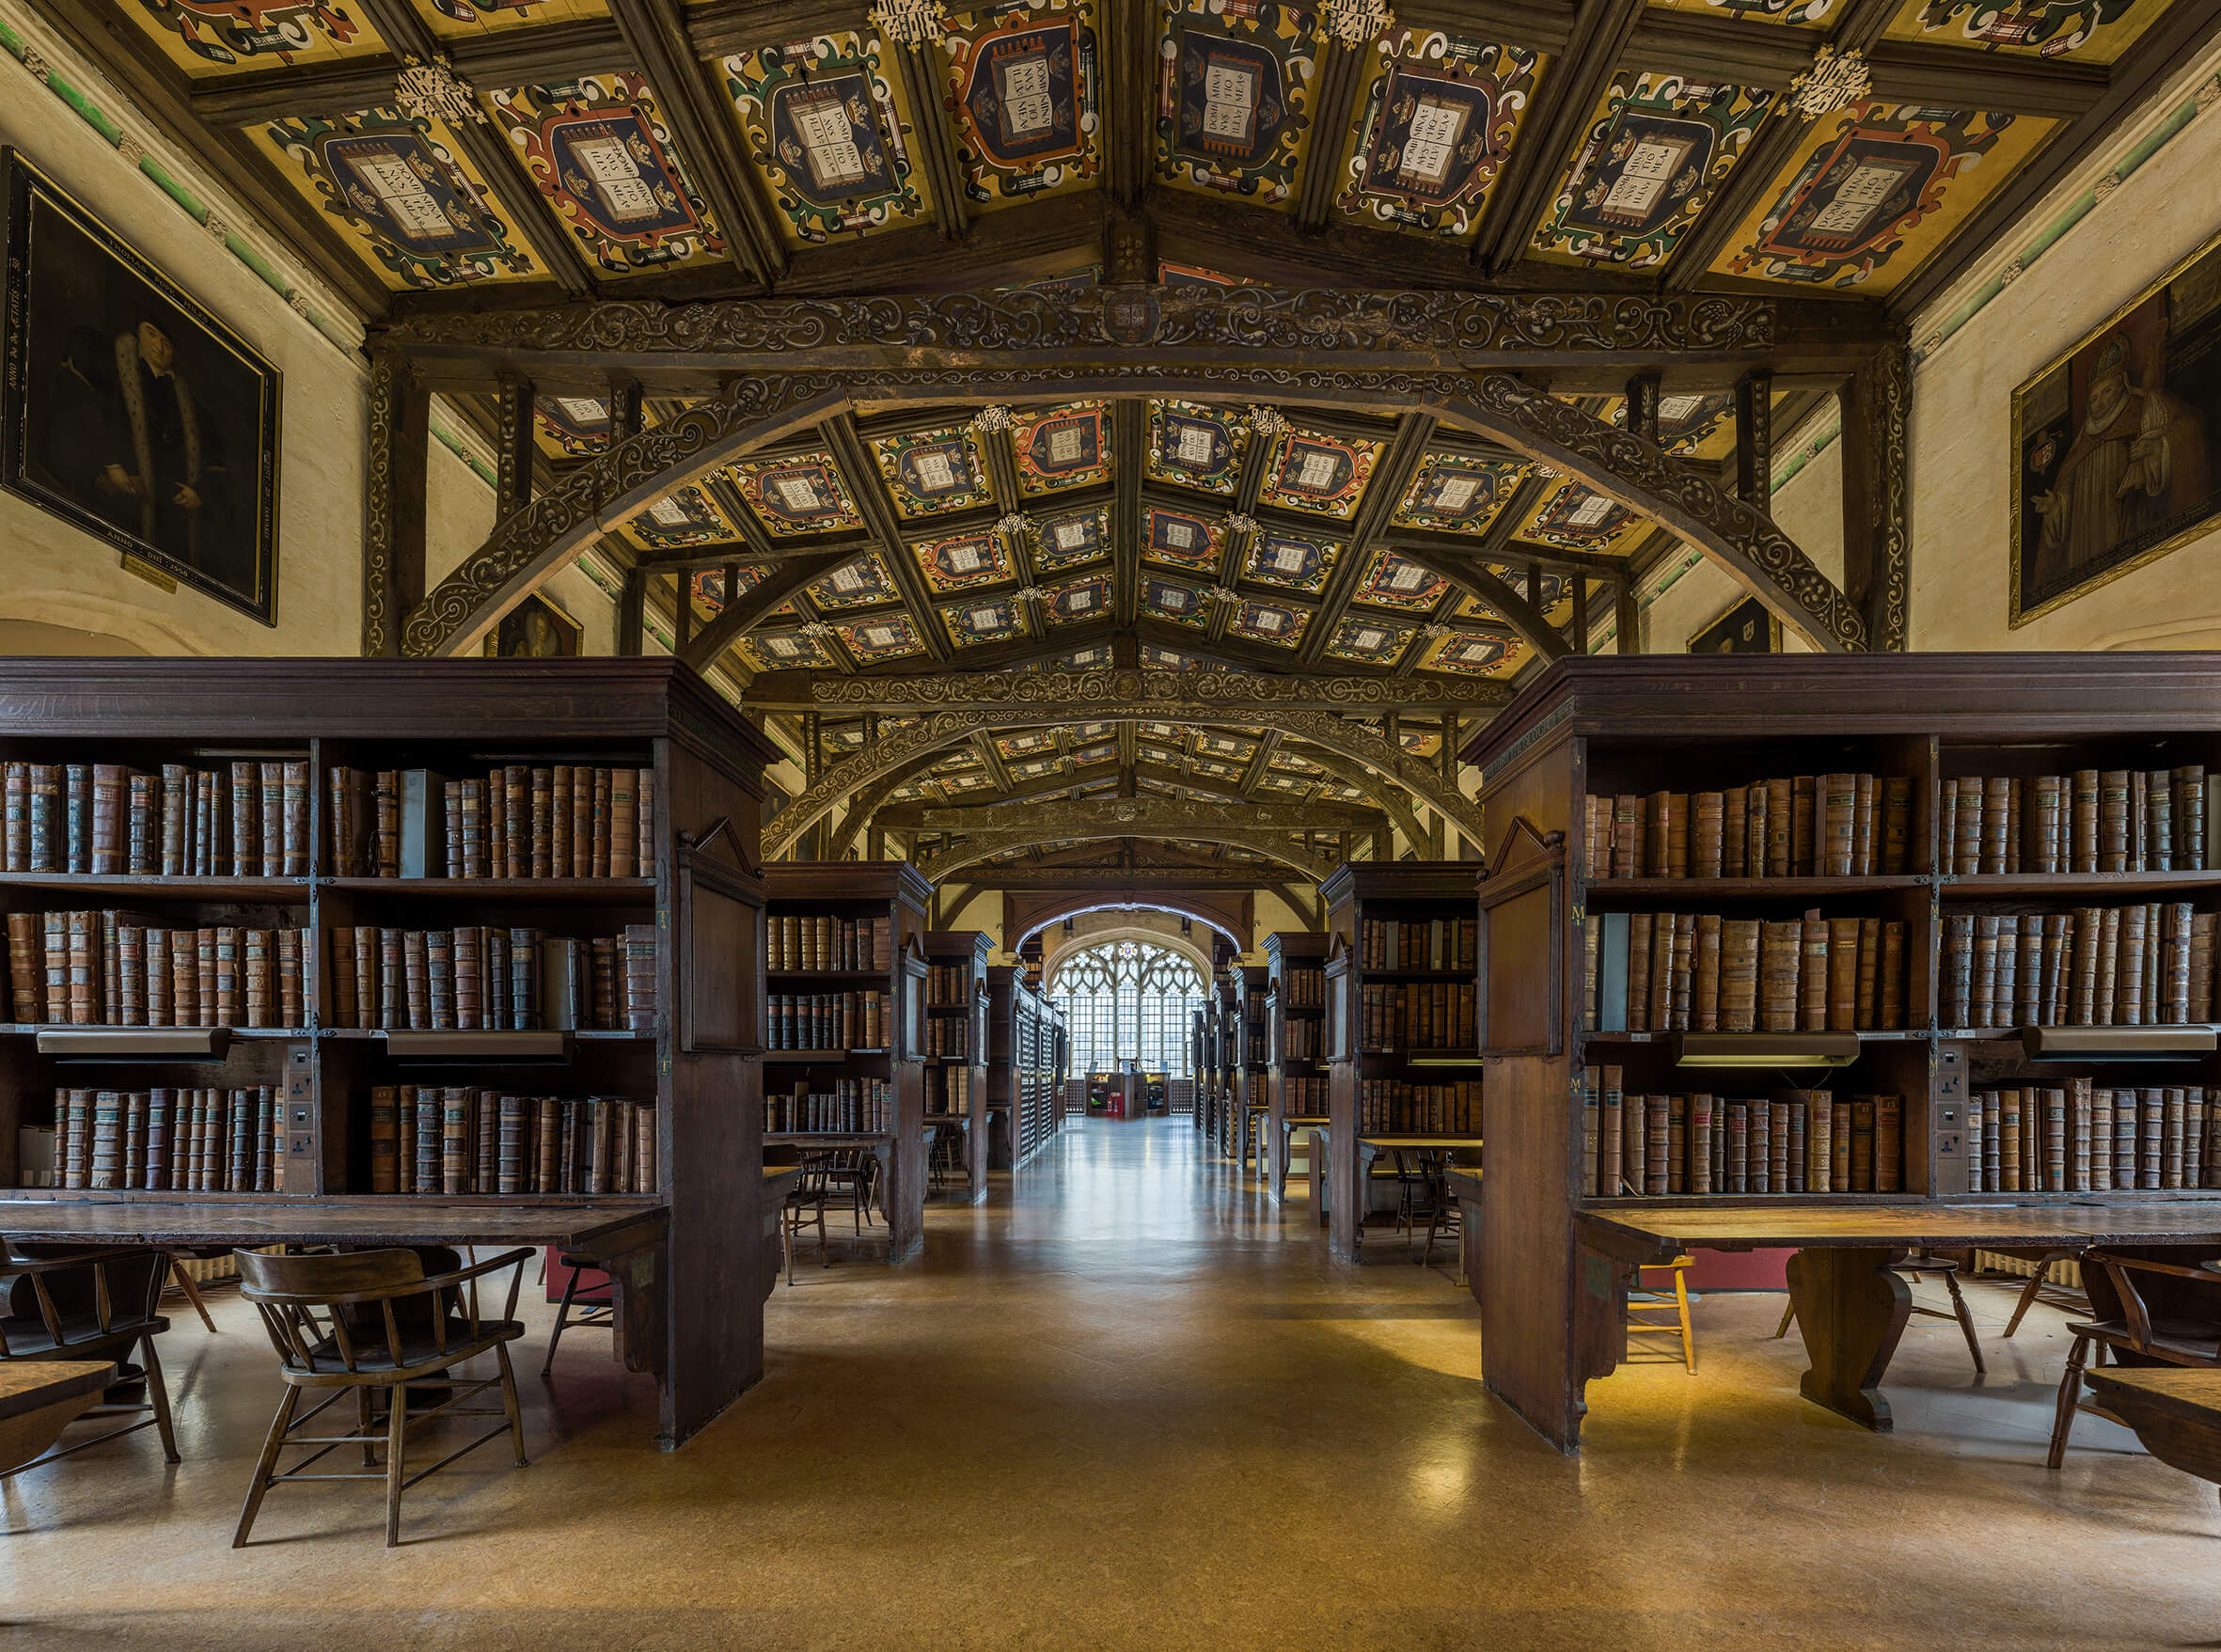 Libraries guide. Библиотека (Bodleian Library) Оксфорда. Библиотека Хогвартса Бодлианская библиотека Оксфорд. Оксфорд университет Бодлианская библиотека. Бодлеянская библиотека в Оксфорде.